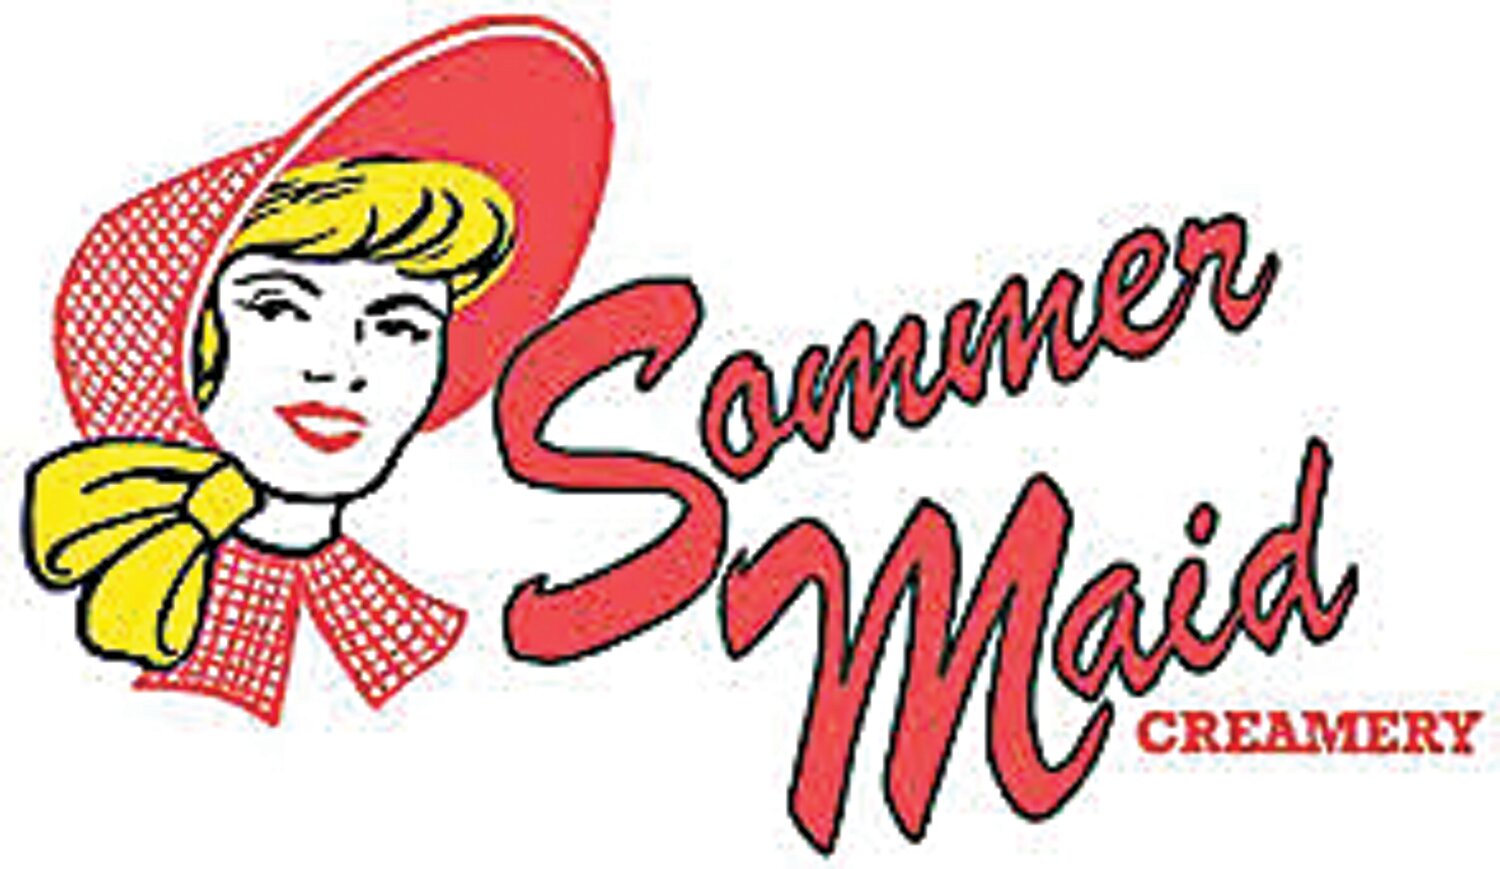 The Sommer Maid Creamery logo.